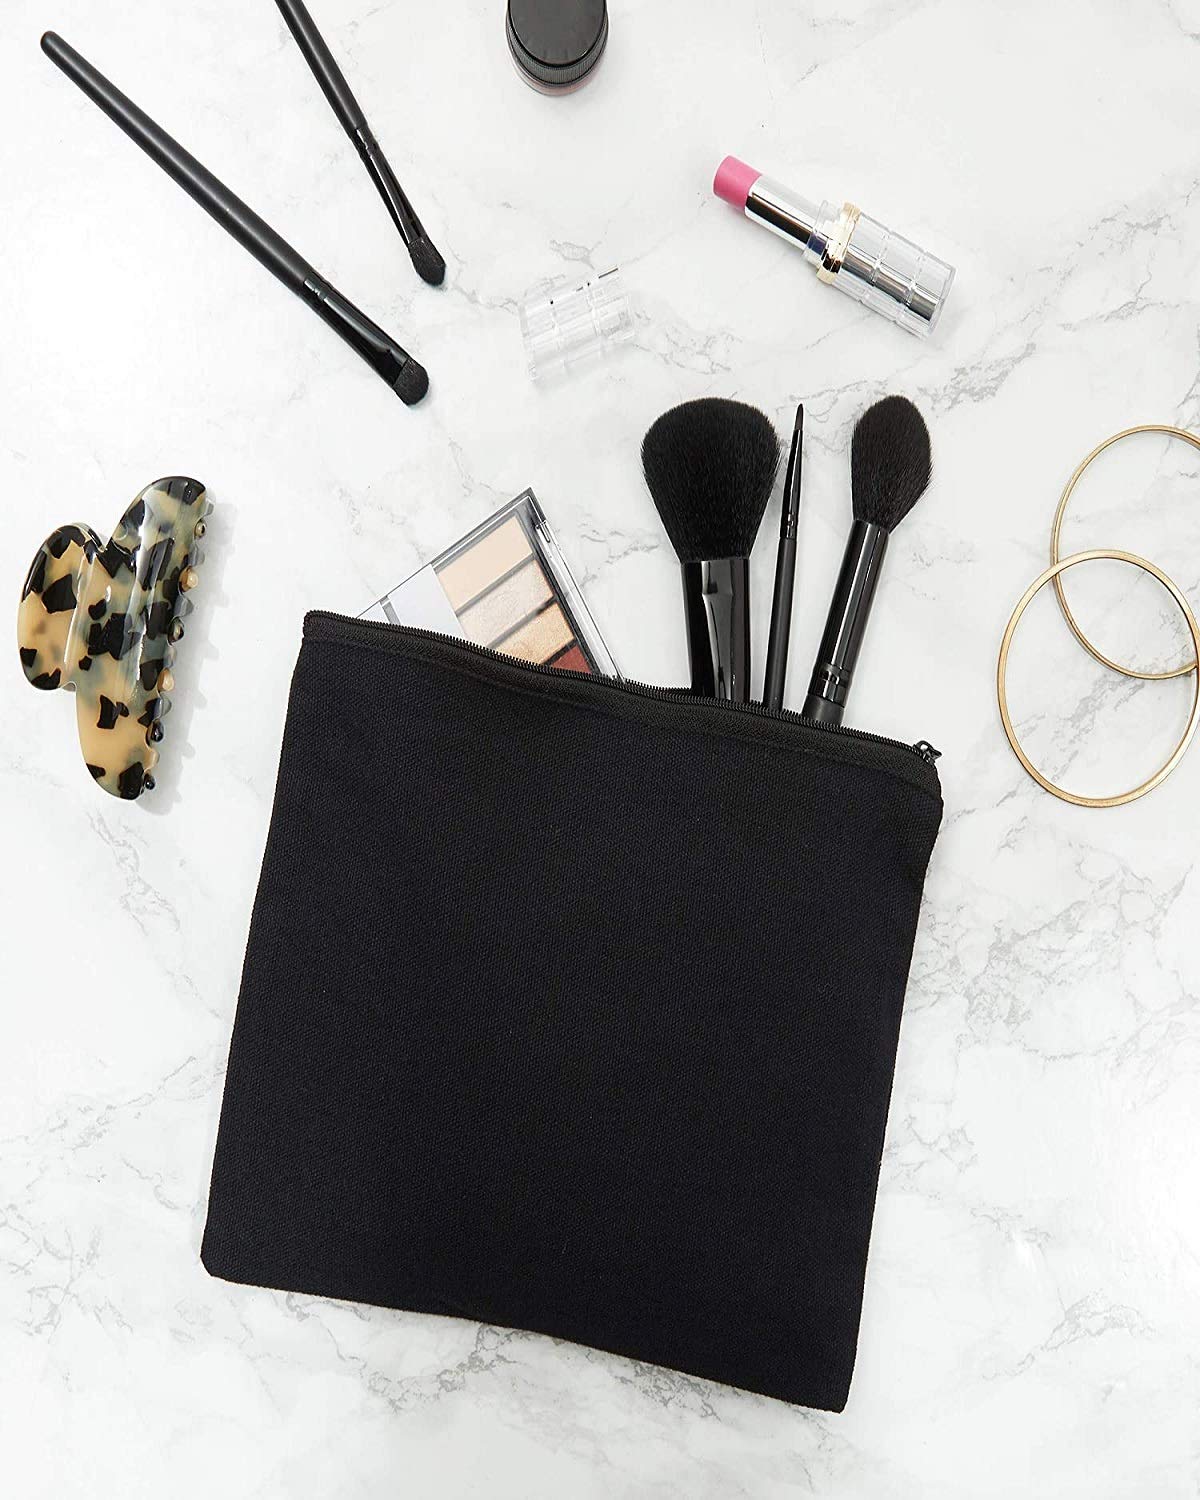 NJ Cosmetic Bag Multipurpose Makeup Bag with Zipper Canvas Bag, Travel Toiletry Pouch DIY Bag, Jewelry Bag, Travel Bag, Cosmetic Bag (5.5x5.5 Inches): 12 Pcs